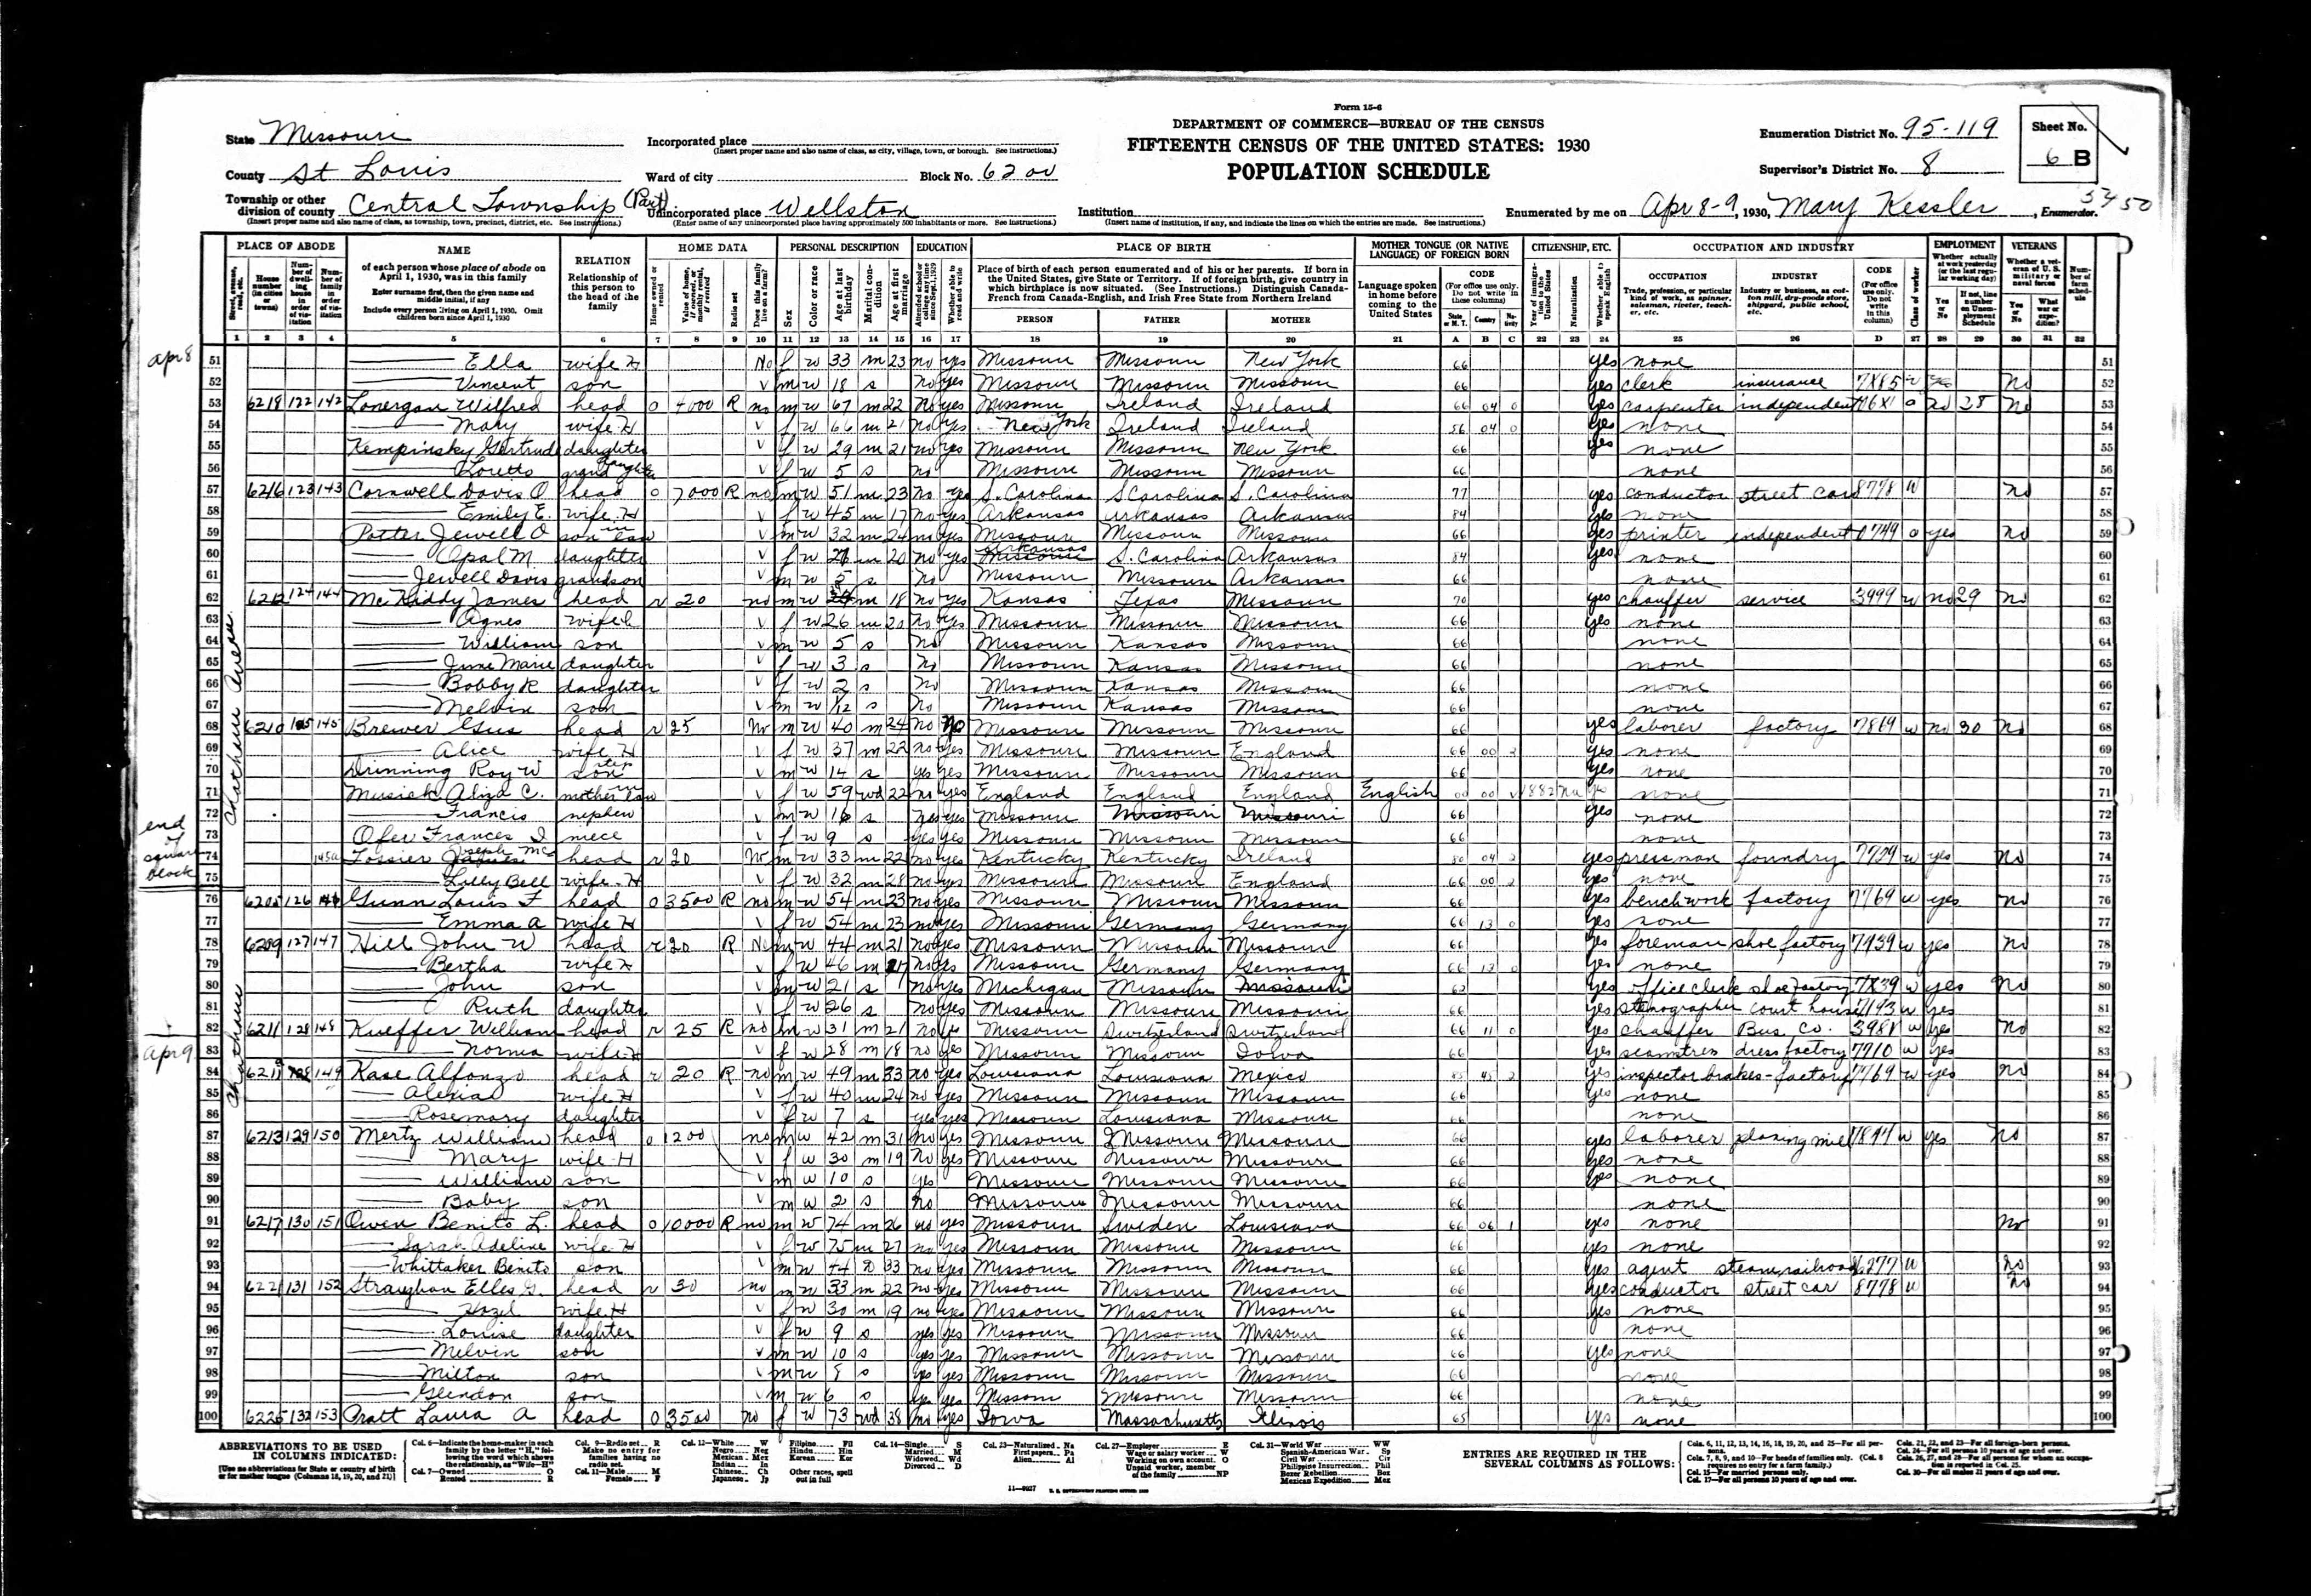 1930 Census, Wellston, St. Louis county, Missouri